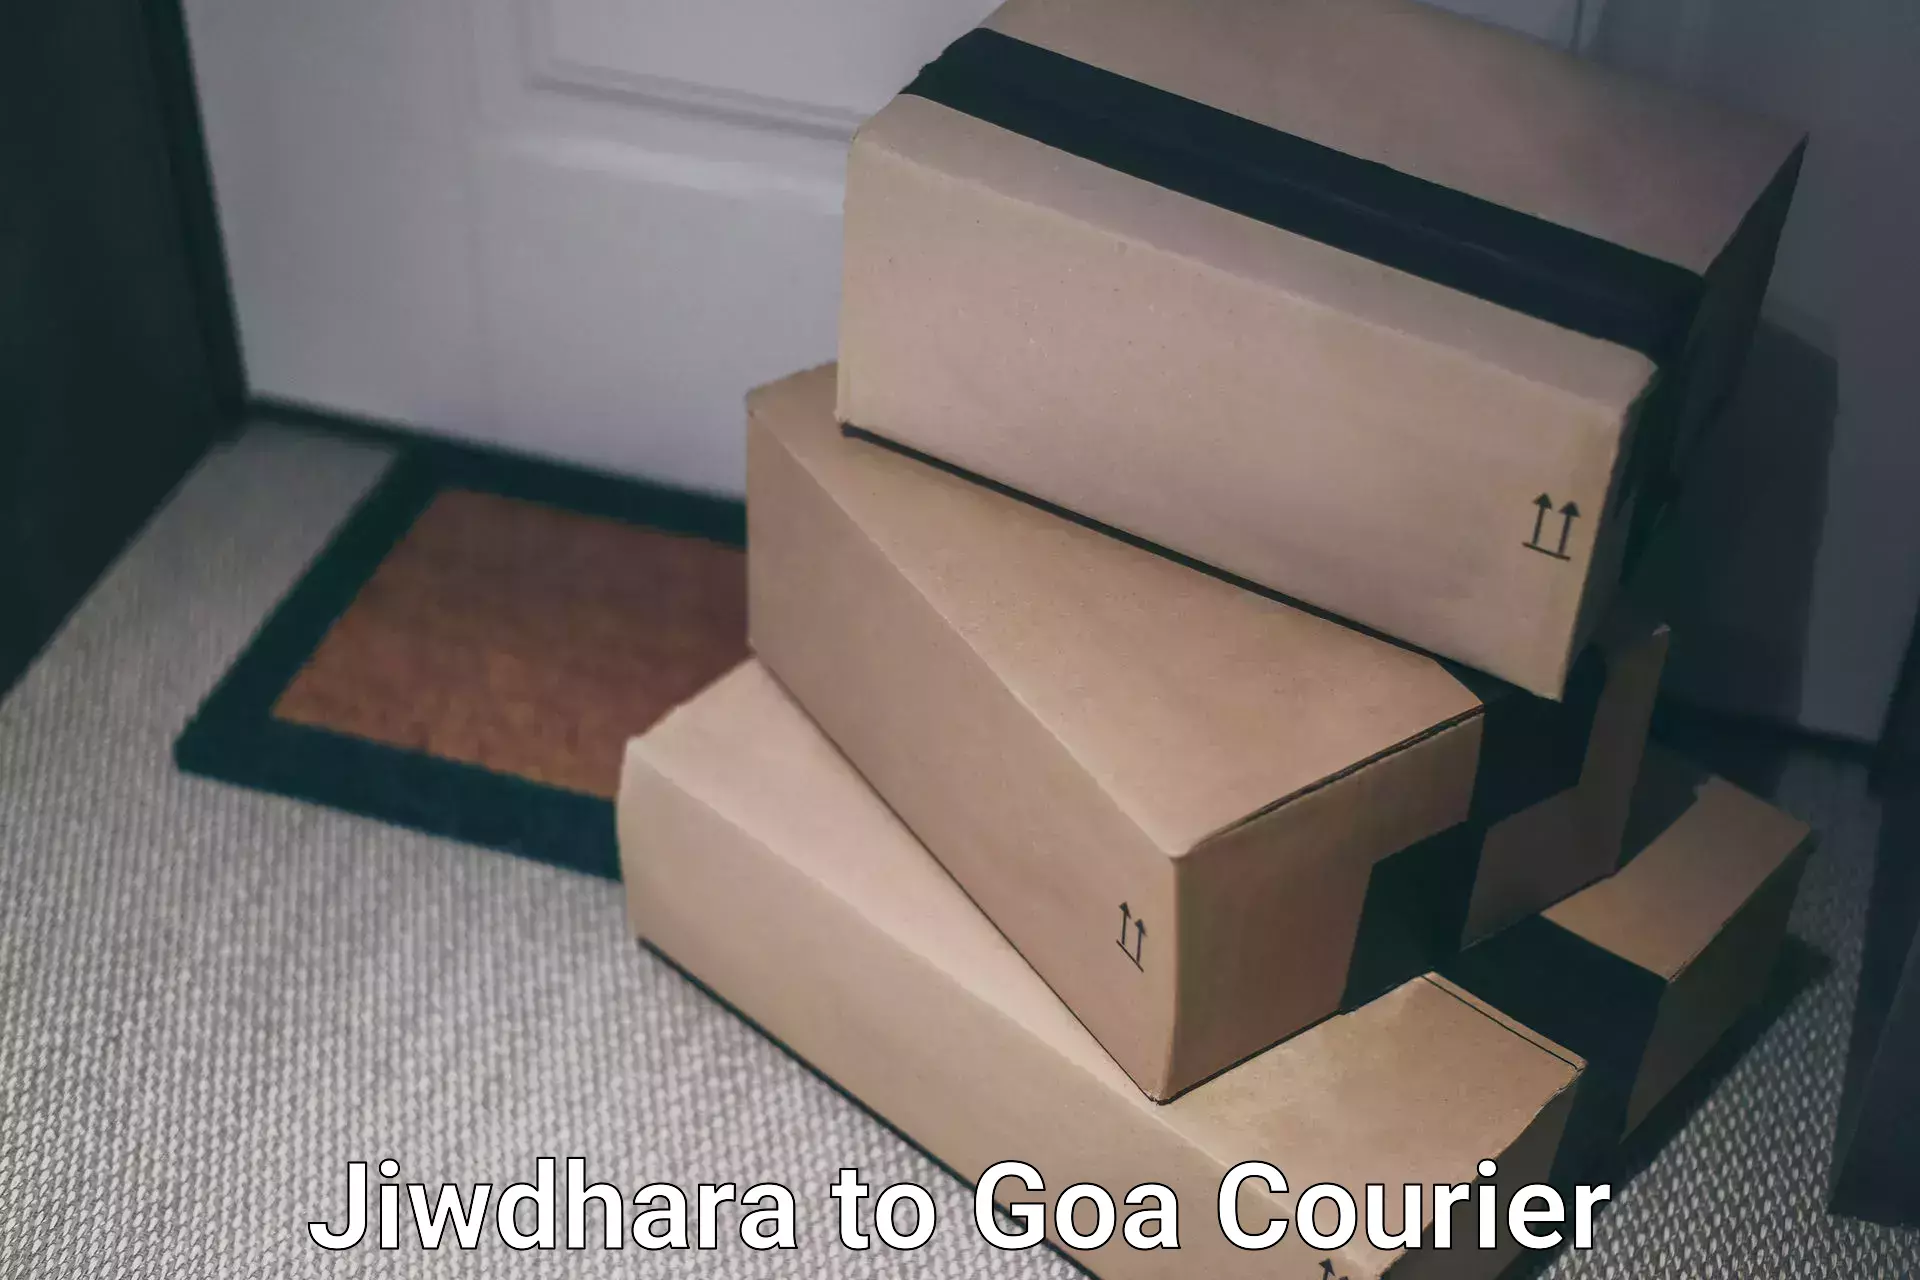 Seamless shipping experience Jiwdhara to Goa